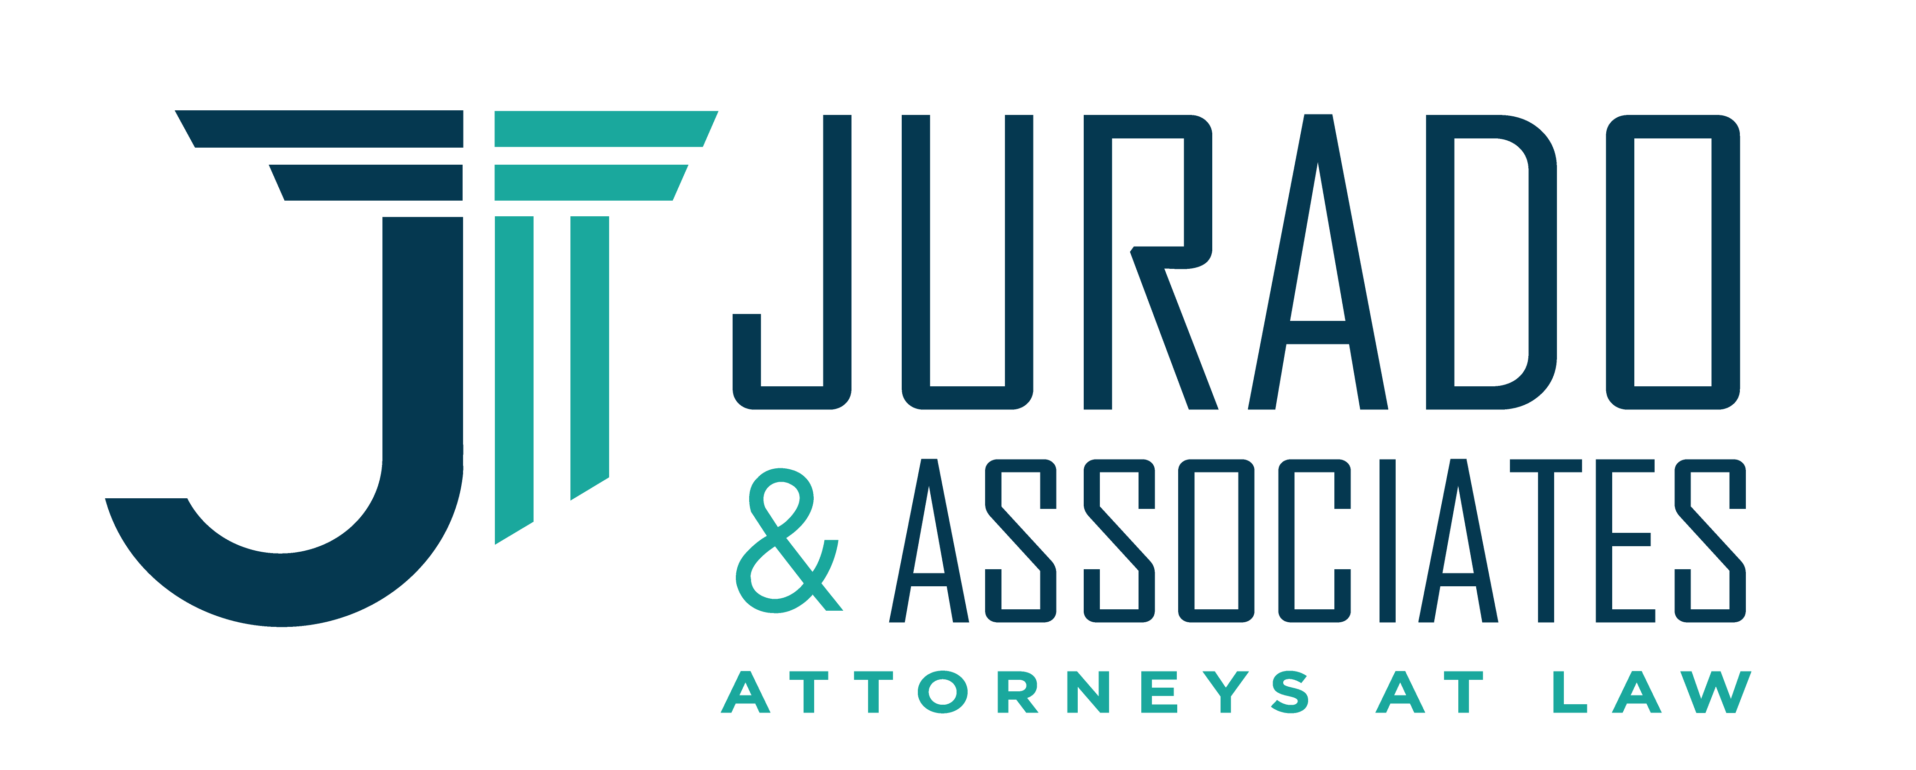 Jurado & Associates, P.A. Your Trusted Florida Probate Lawyers (305) 921-0976 Romy@juradolawfirm.com